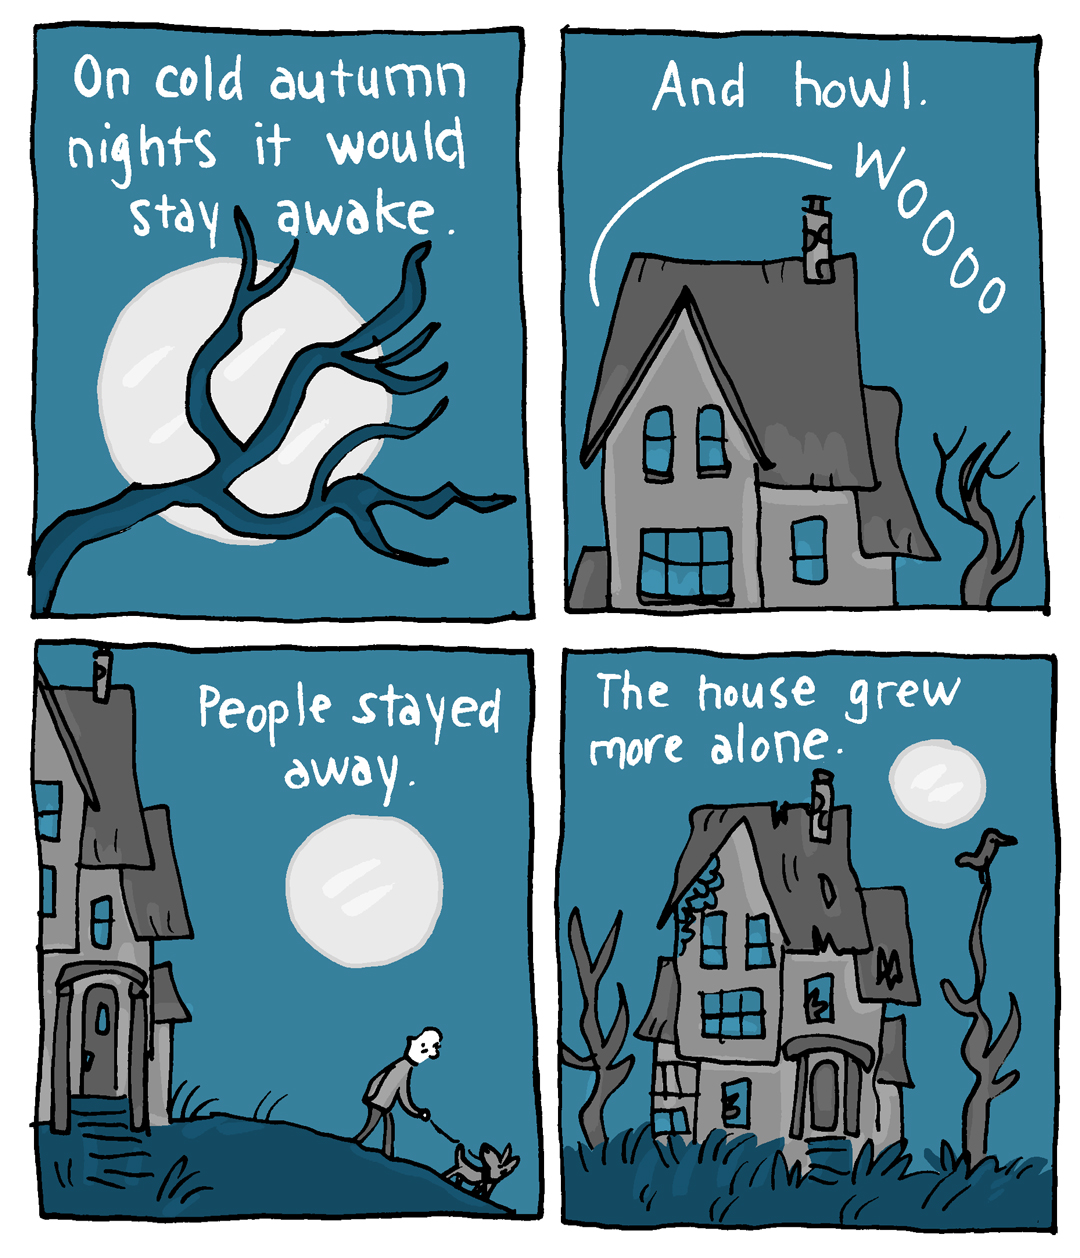 INCIDENTAL COMICS: The Haunted House